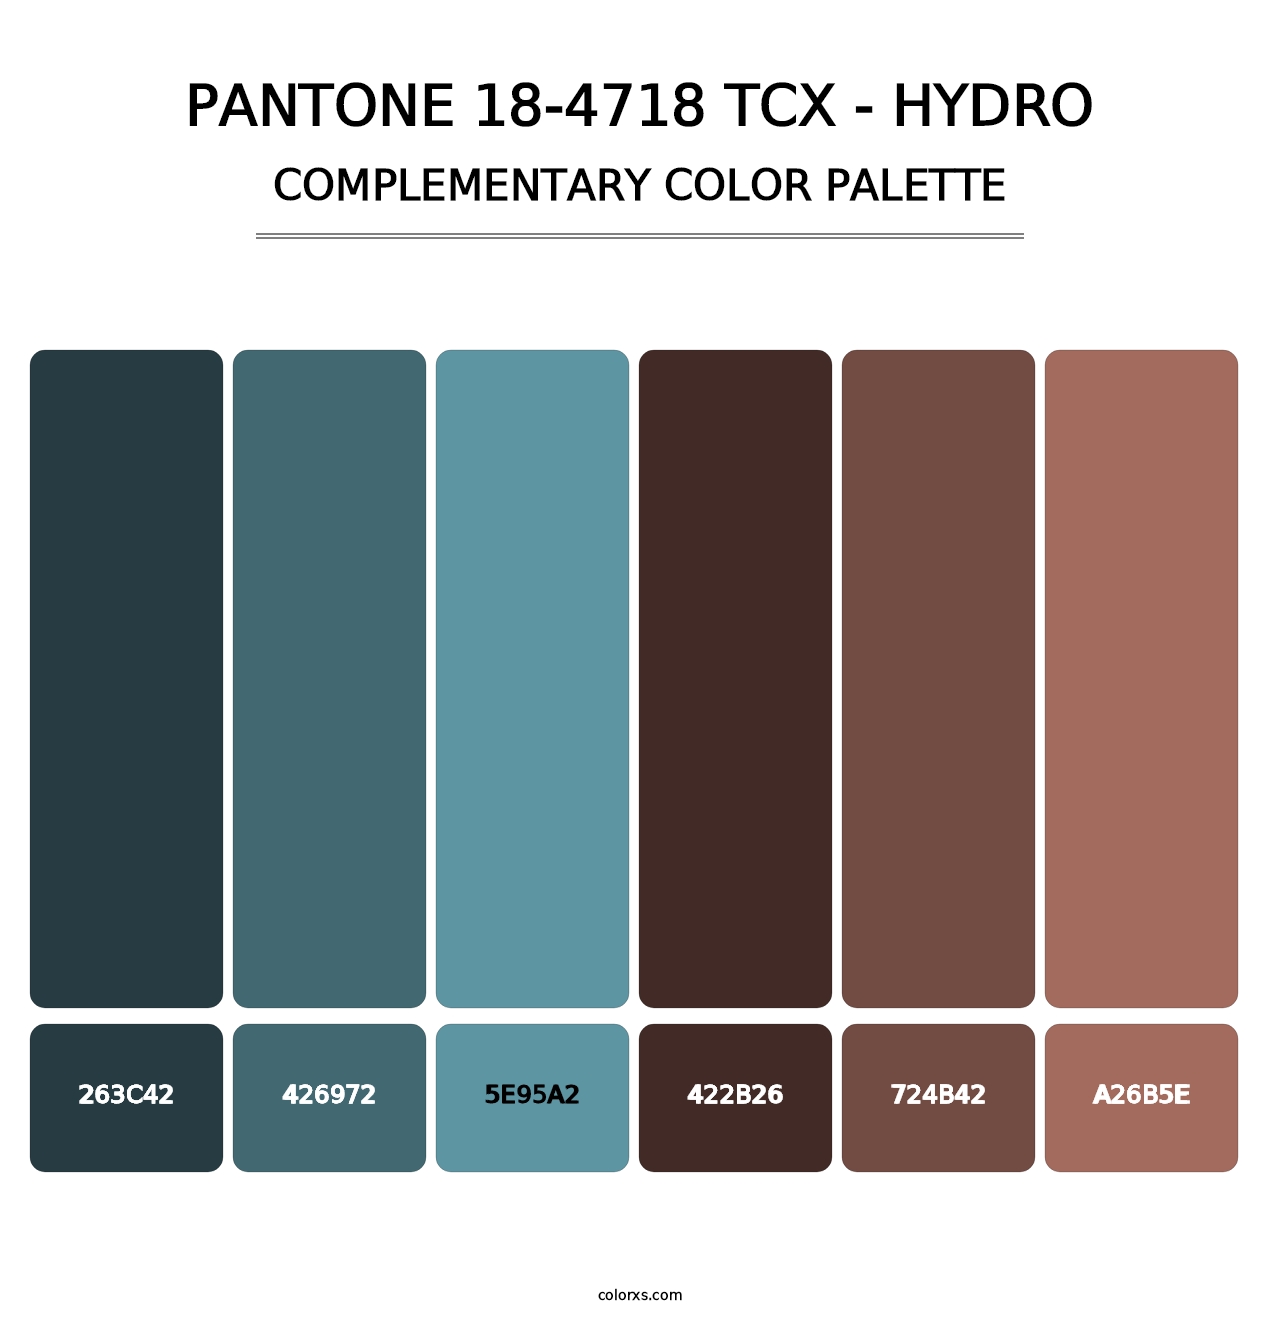 PANTONE 18-4718 TCX - Hydro - Complementary Color Palette